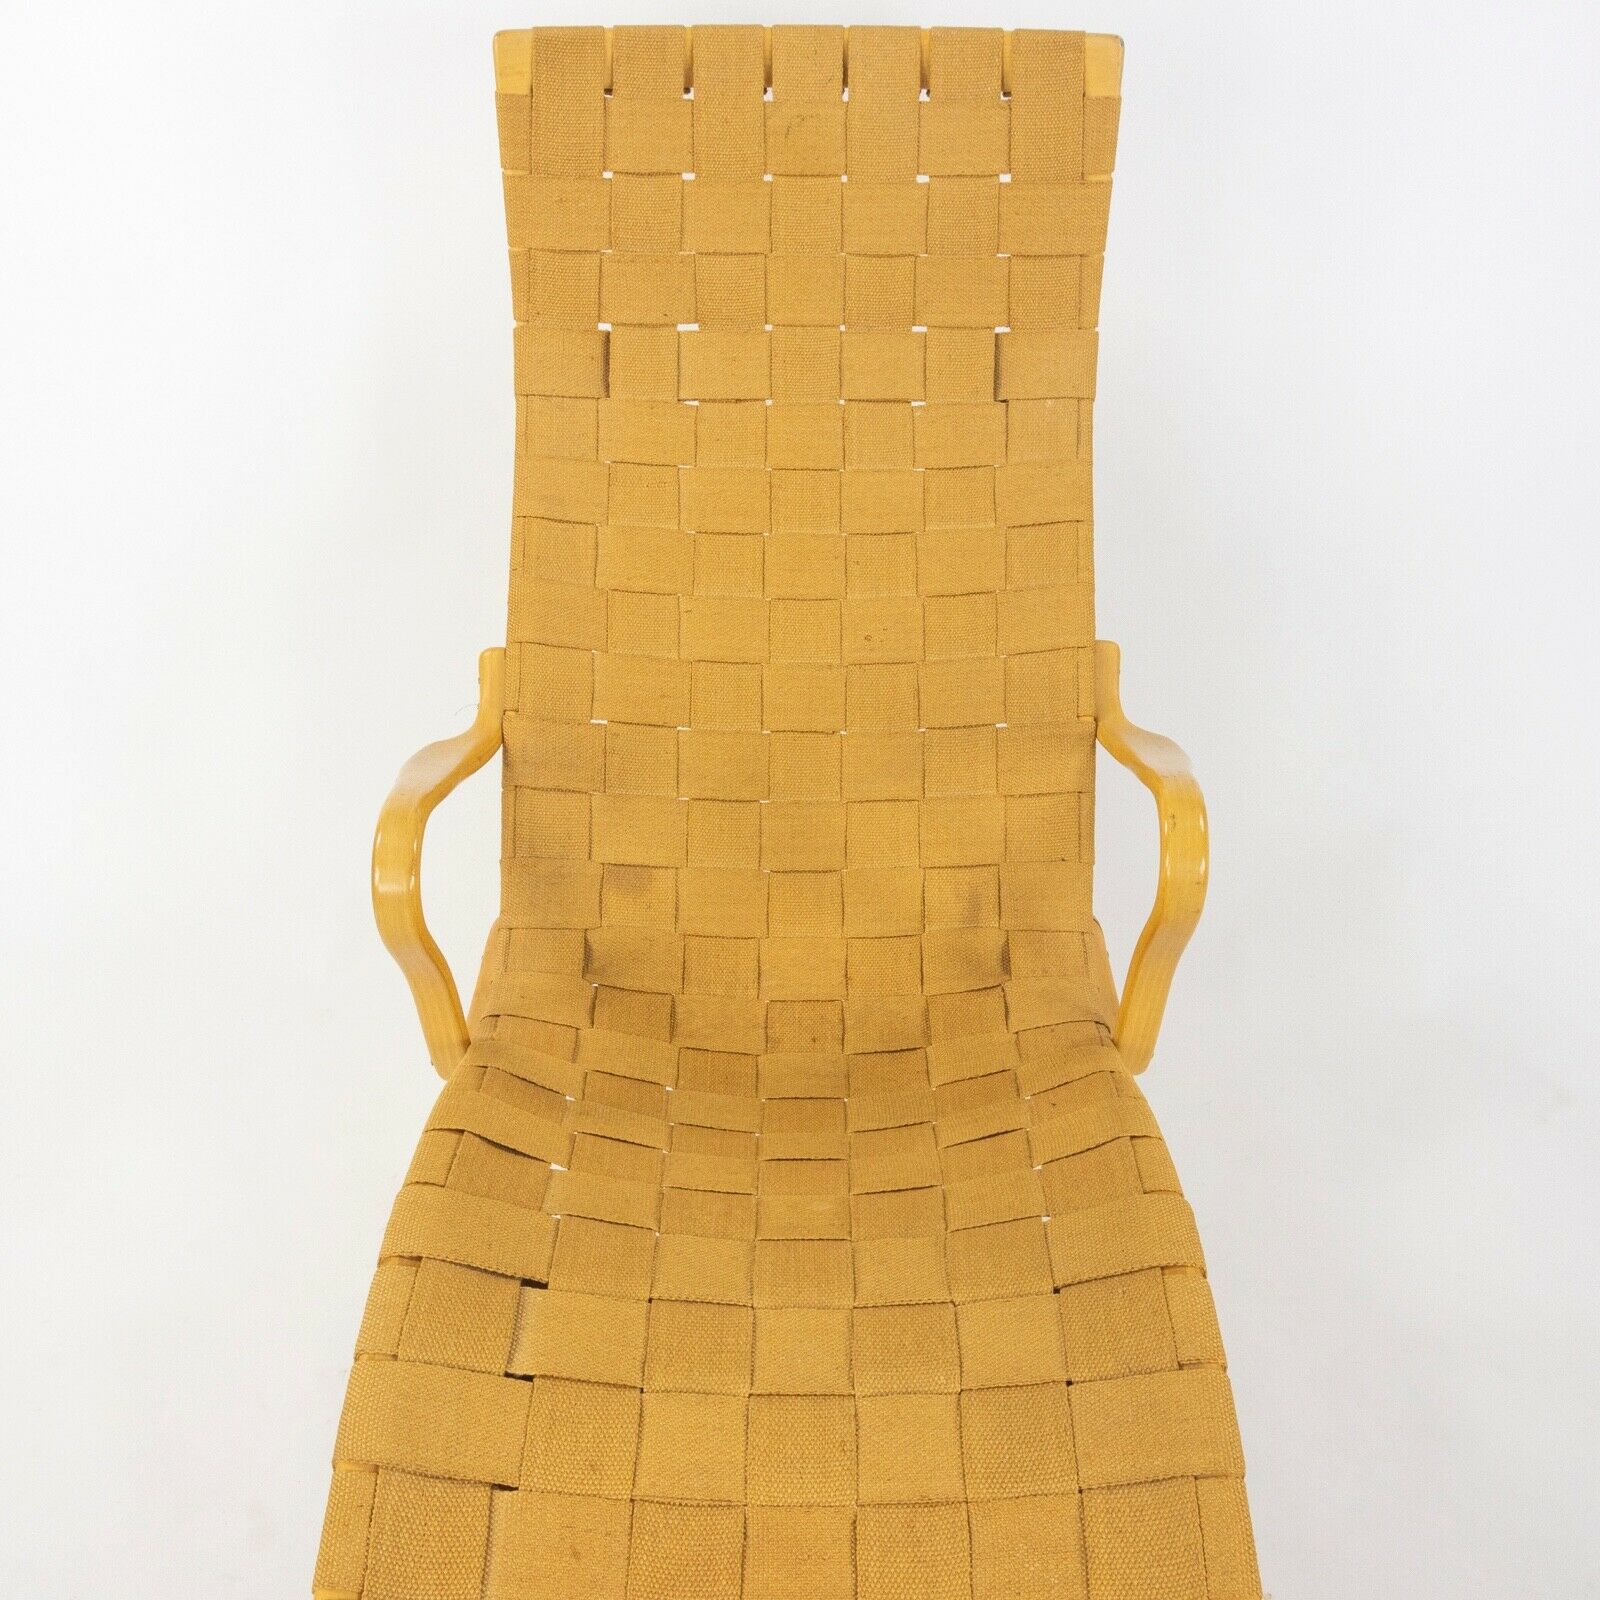 SOLD 1950s Bruno Matthsson Karl Mathsson Pernilla Chaise Lounge Chair Made in Sweden